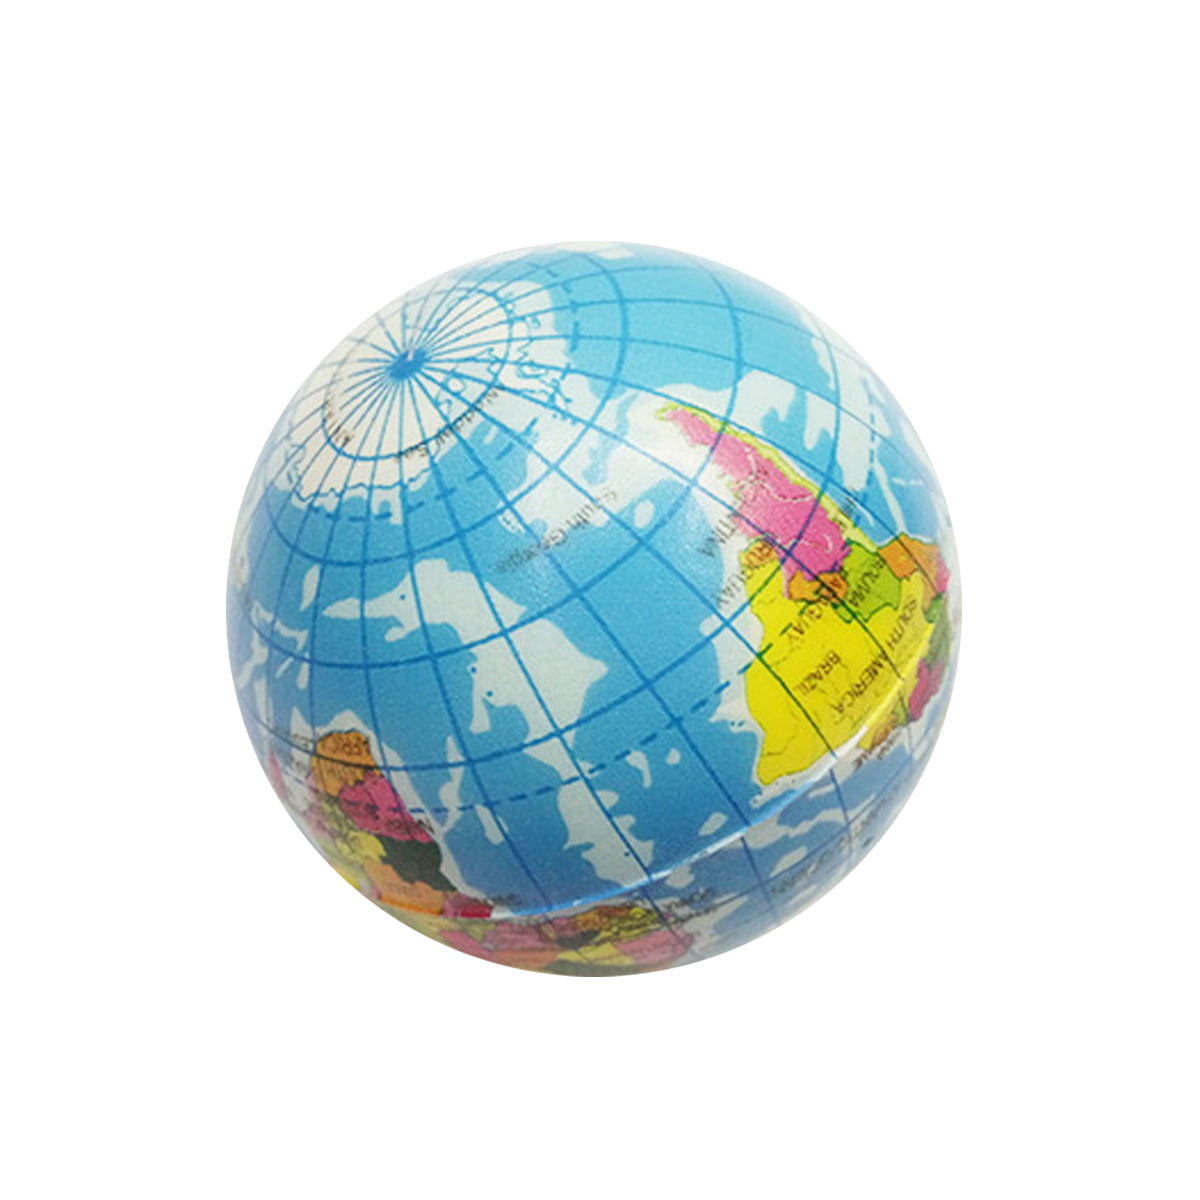 Mini World Map Foam Earth Globe Stress Bouncy Ball Atlas Geography Toy *1pc 